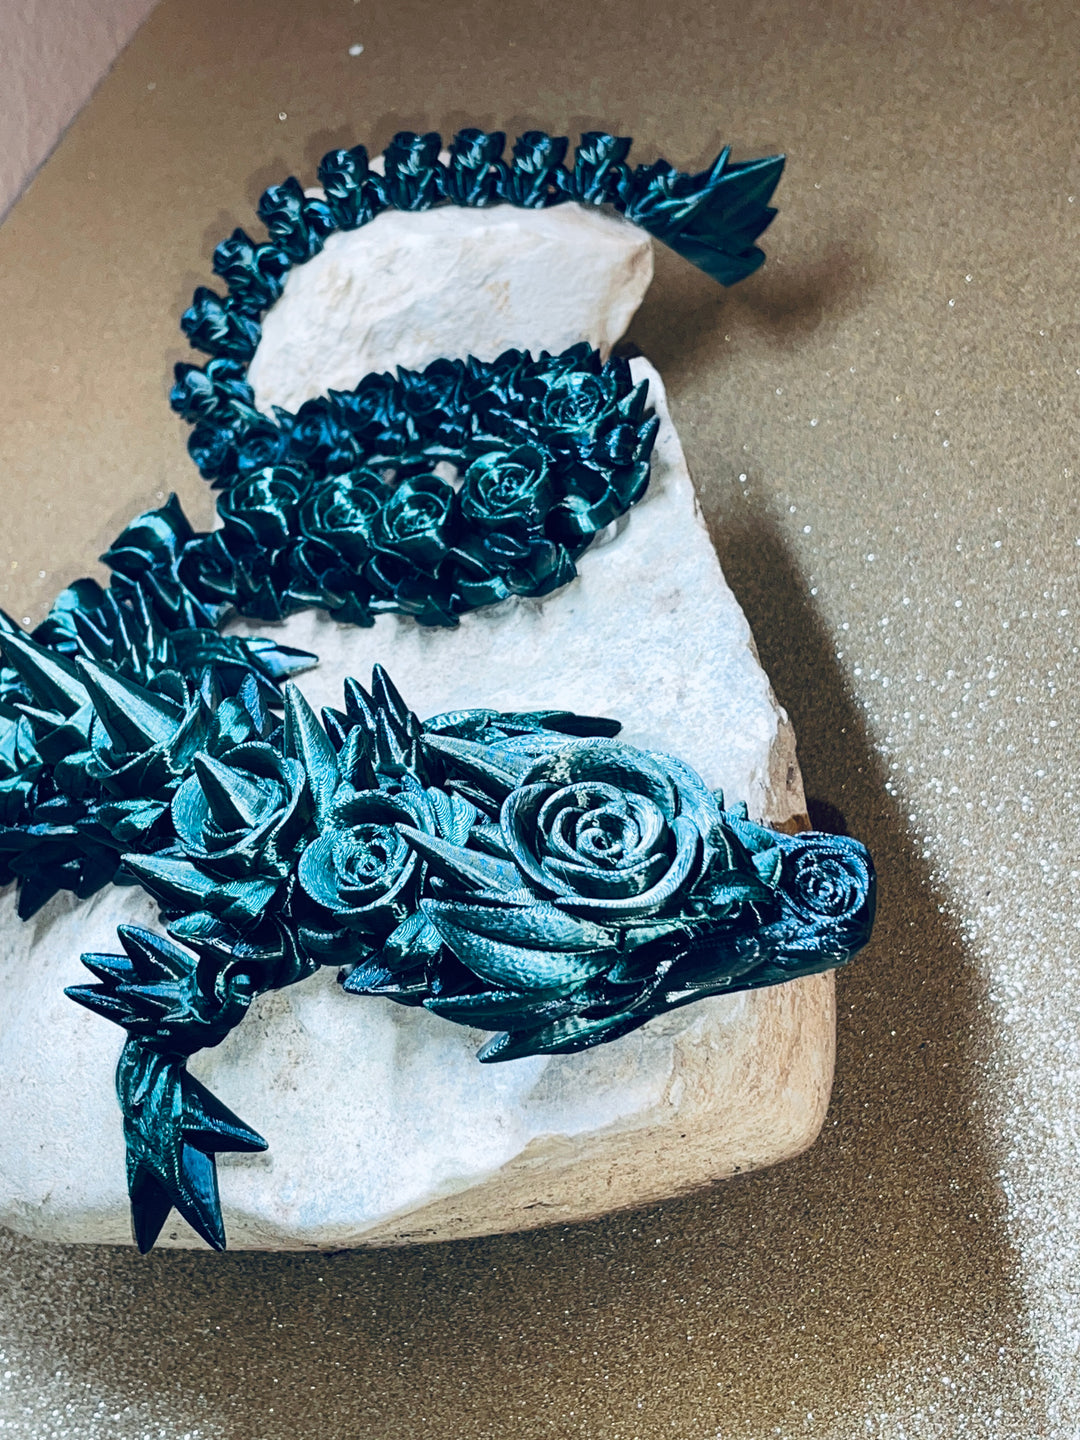 Rose Dragon XL, Articulated 3D Printed Dragon, Flexible 3D Dragon Figure Sculpture, Cinderwing Dragon